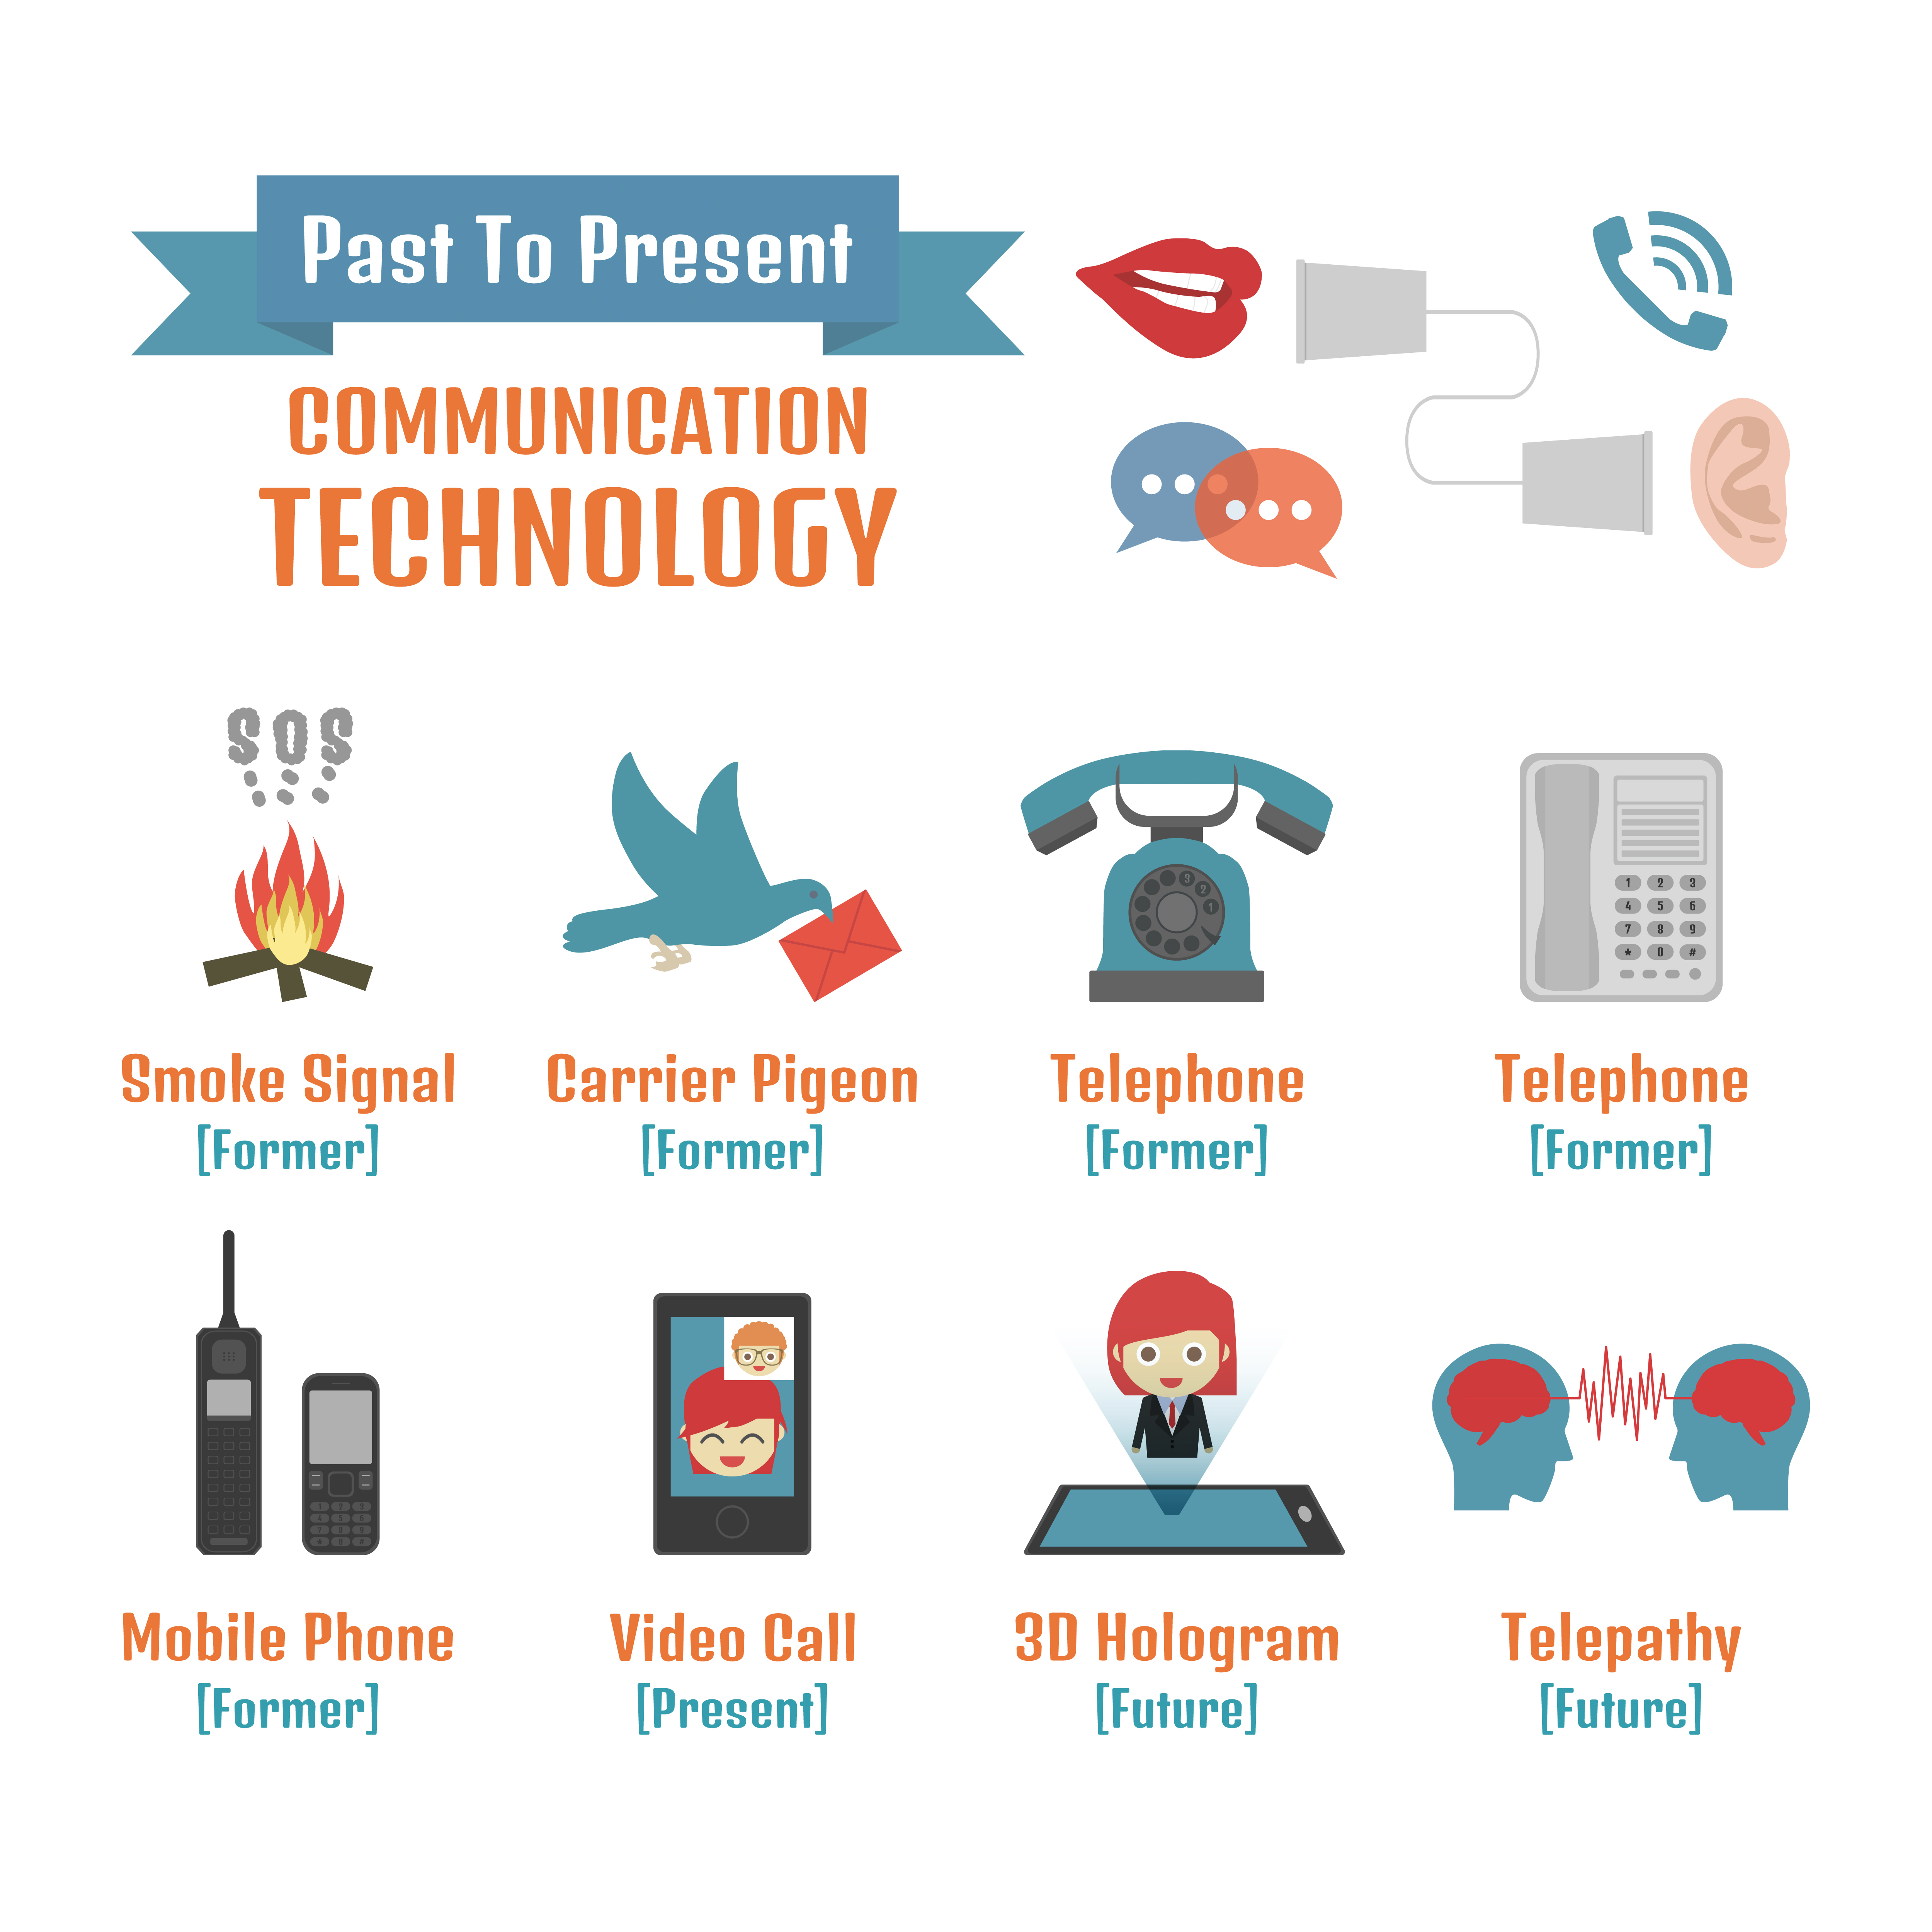 Communication Technology Infographic